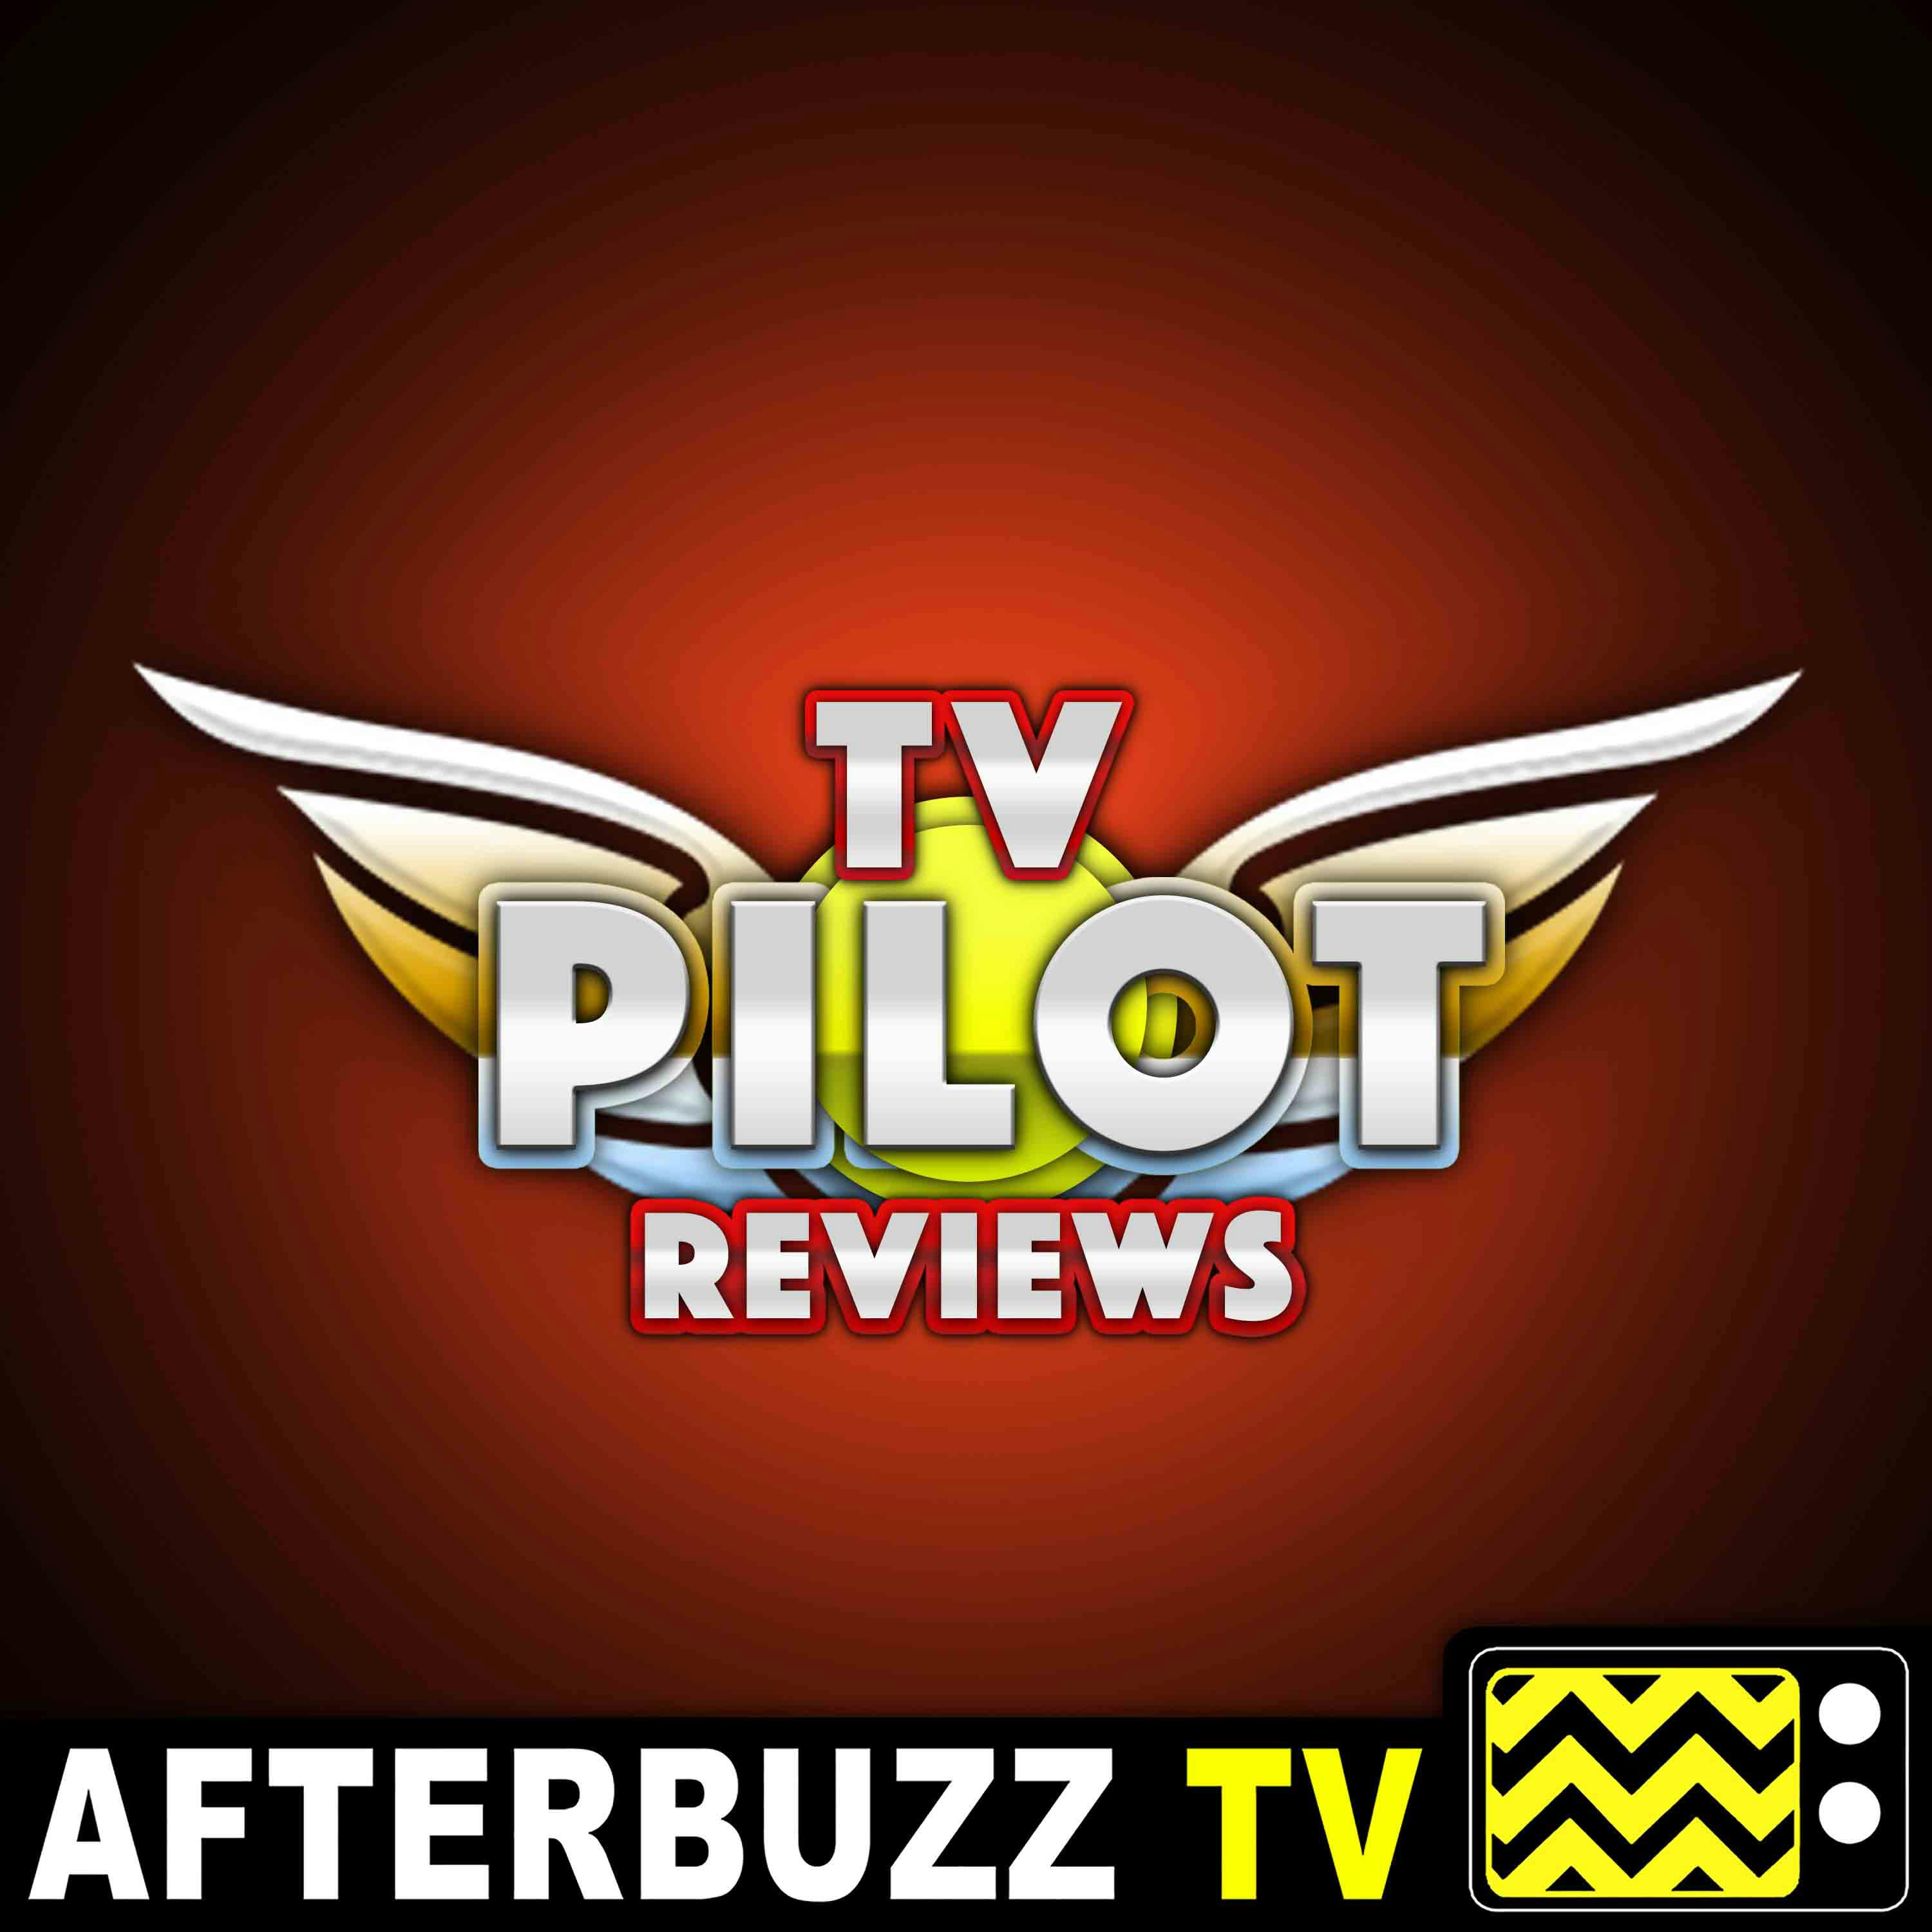 TV Pilot Reviews - AfterBuzz TV